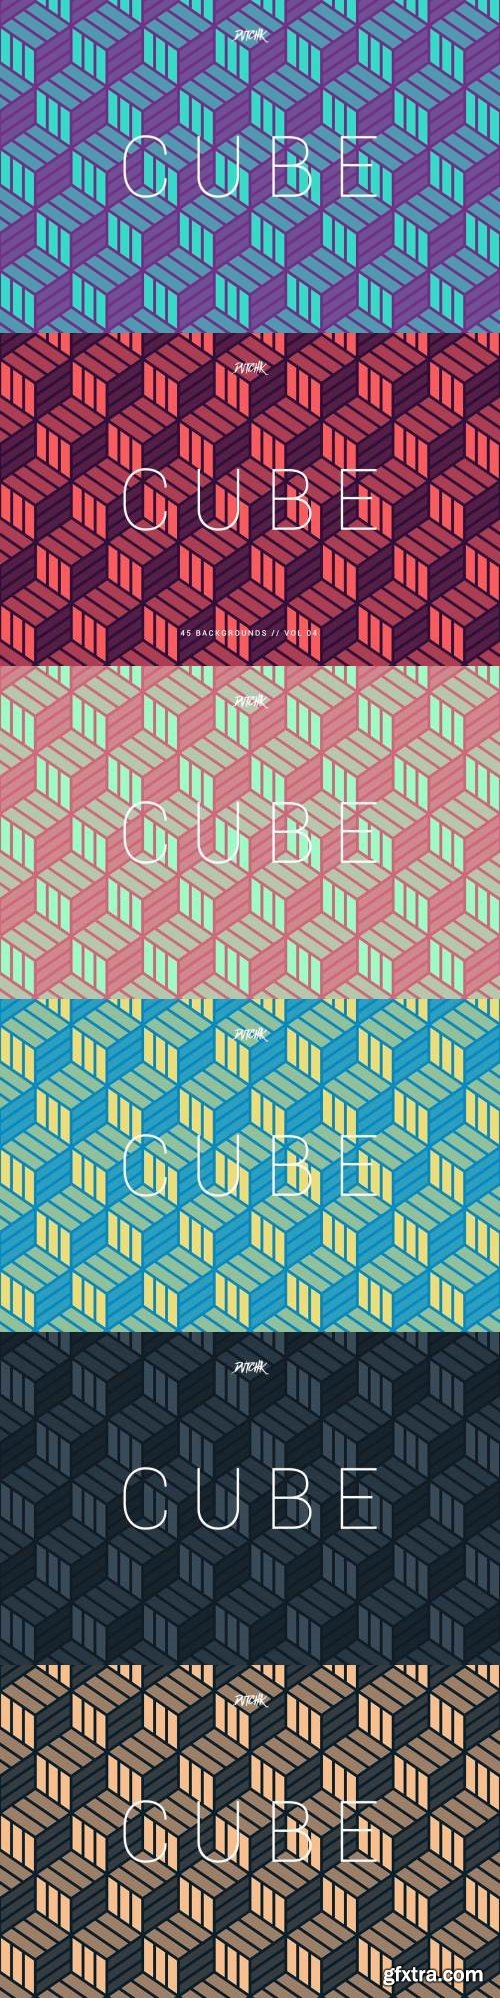 Cube| Seamless Geometric Backgrounds | Vol. 04